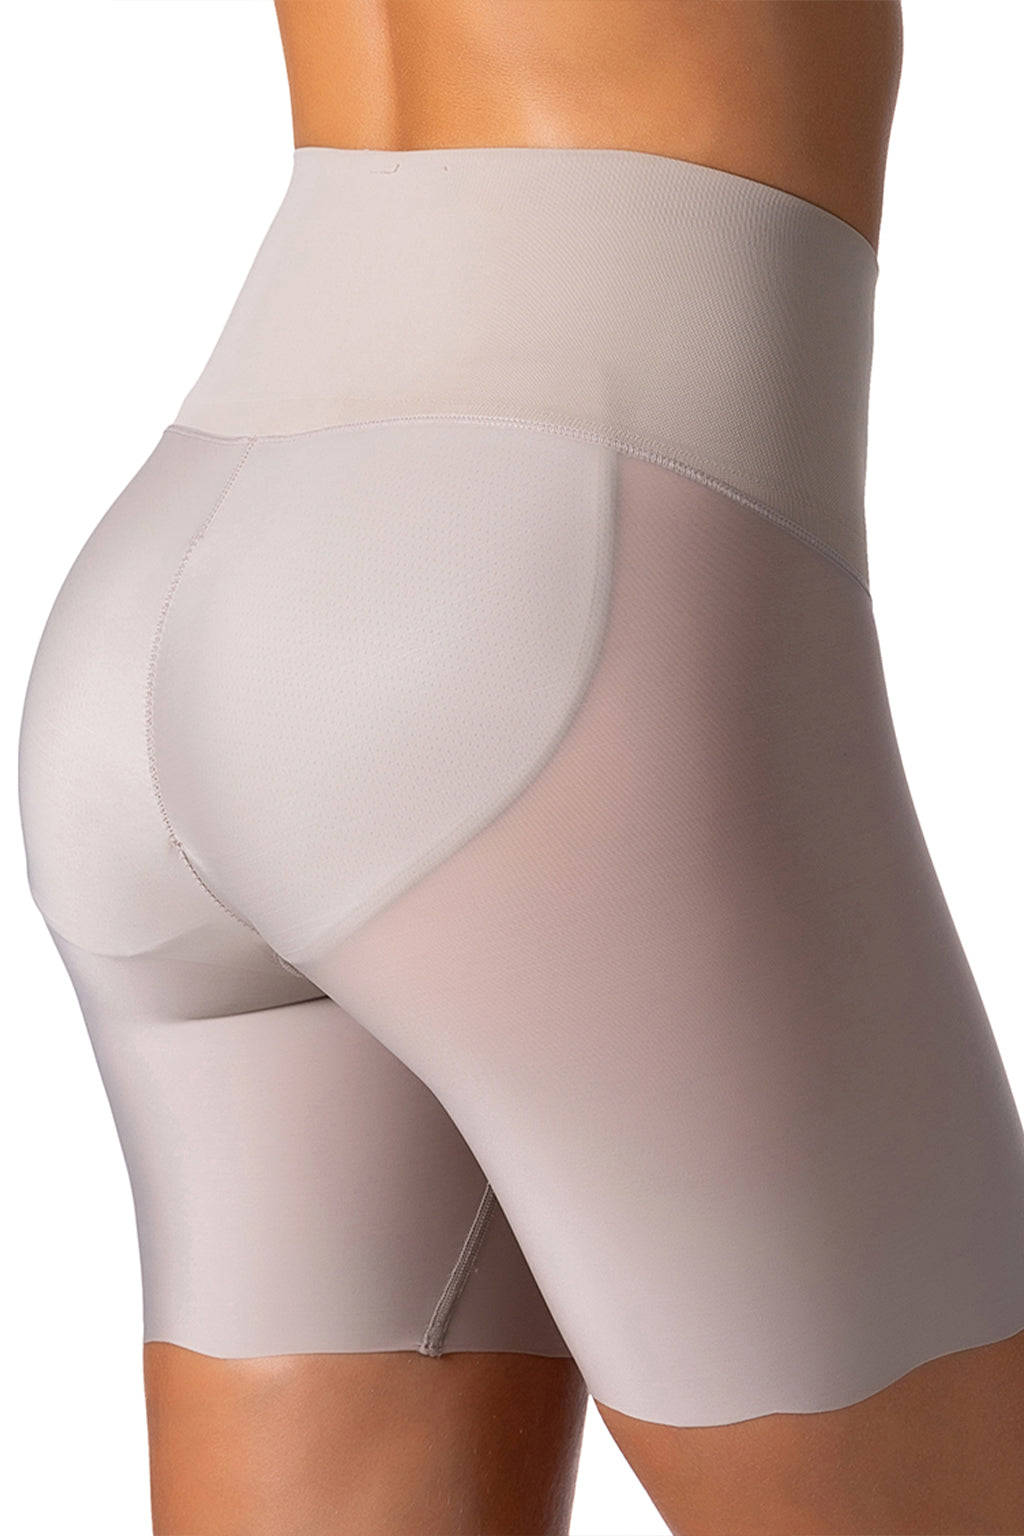 The invisible® LIZ semi Body Aesthetic Shorts